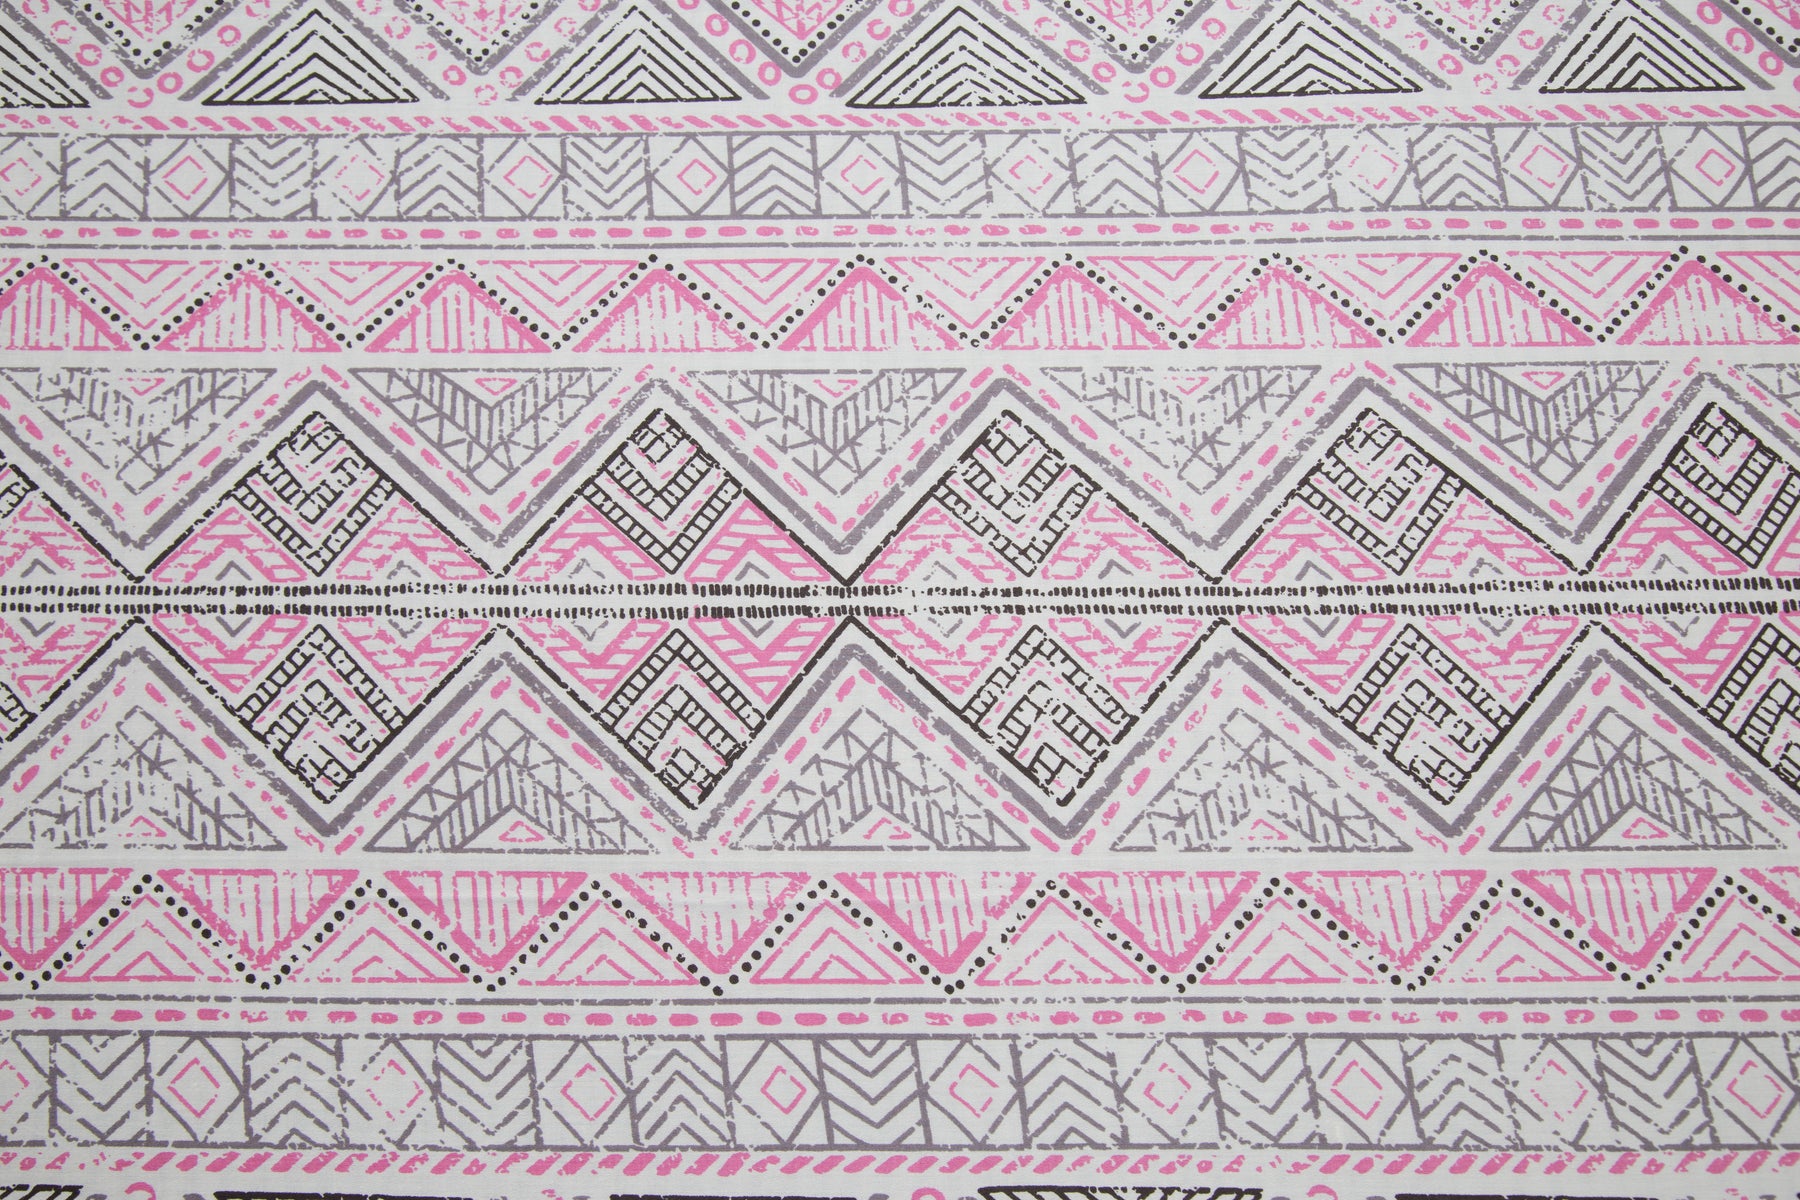 Donatella Austin Printed 200 TC 100% Cotton Pink Bed Sheet